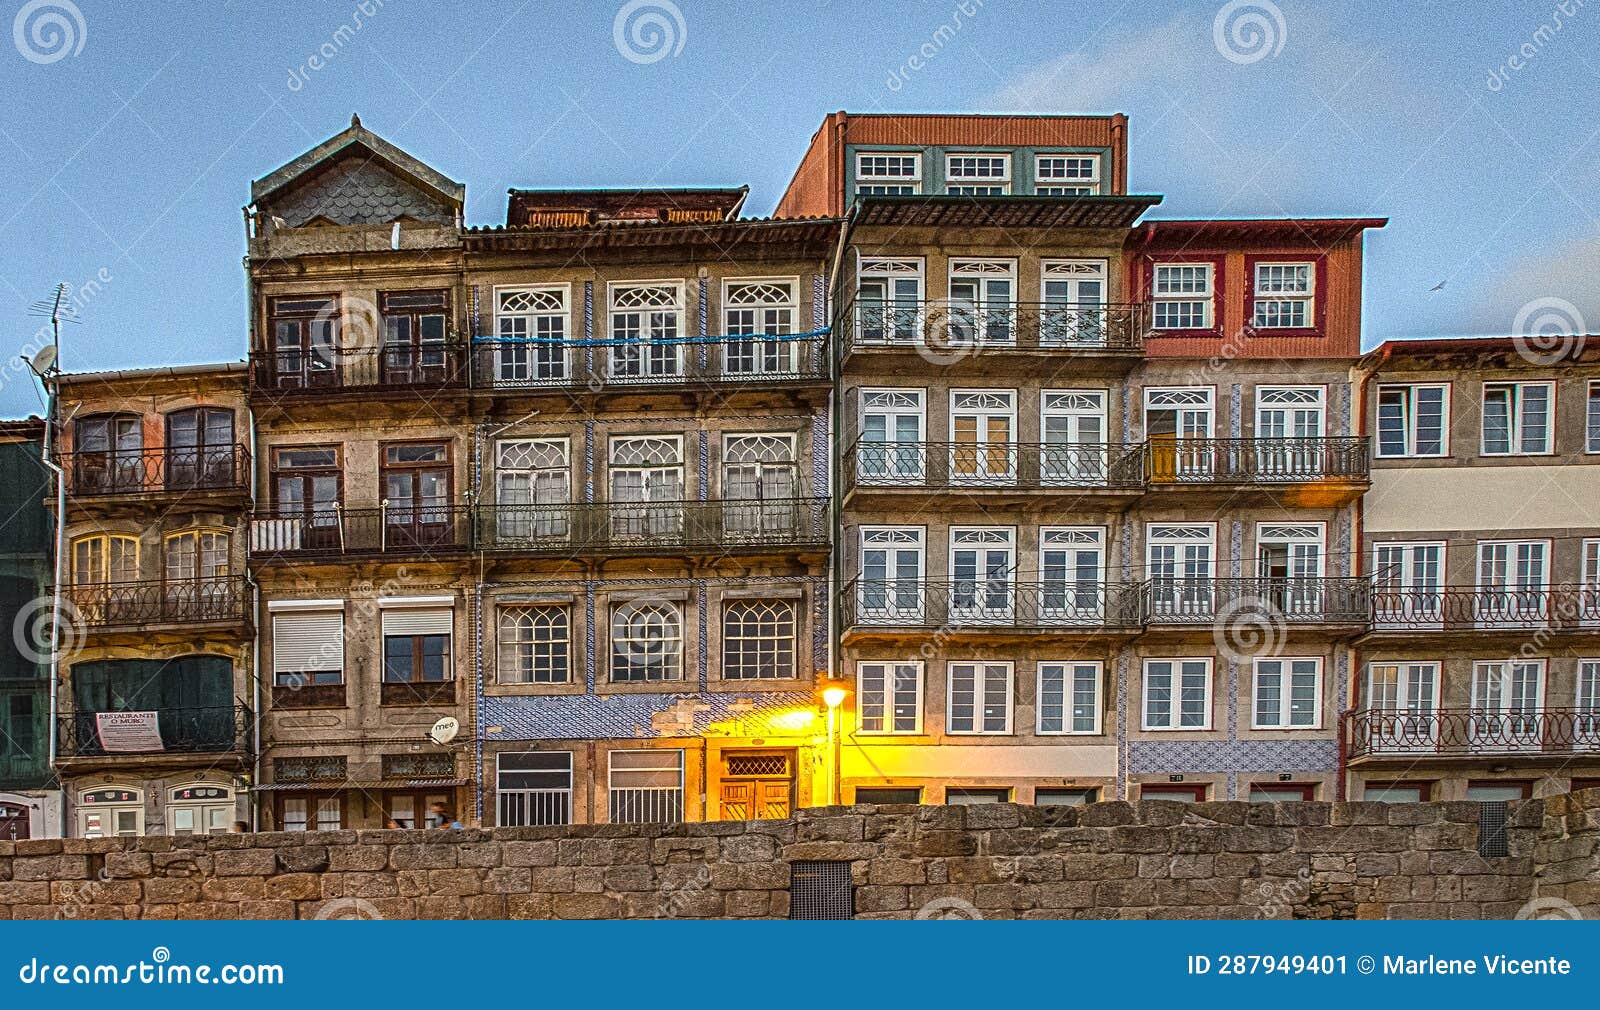 octubre 2013. nice facades of the city of porto. portugal